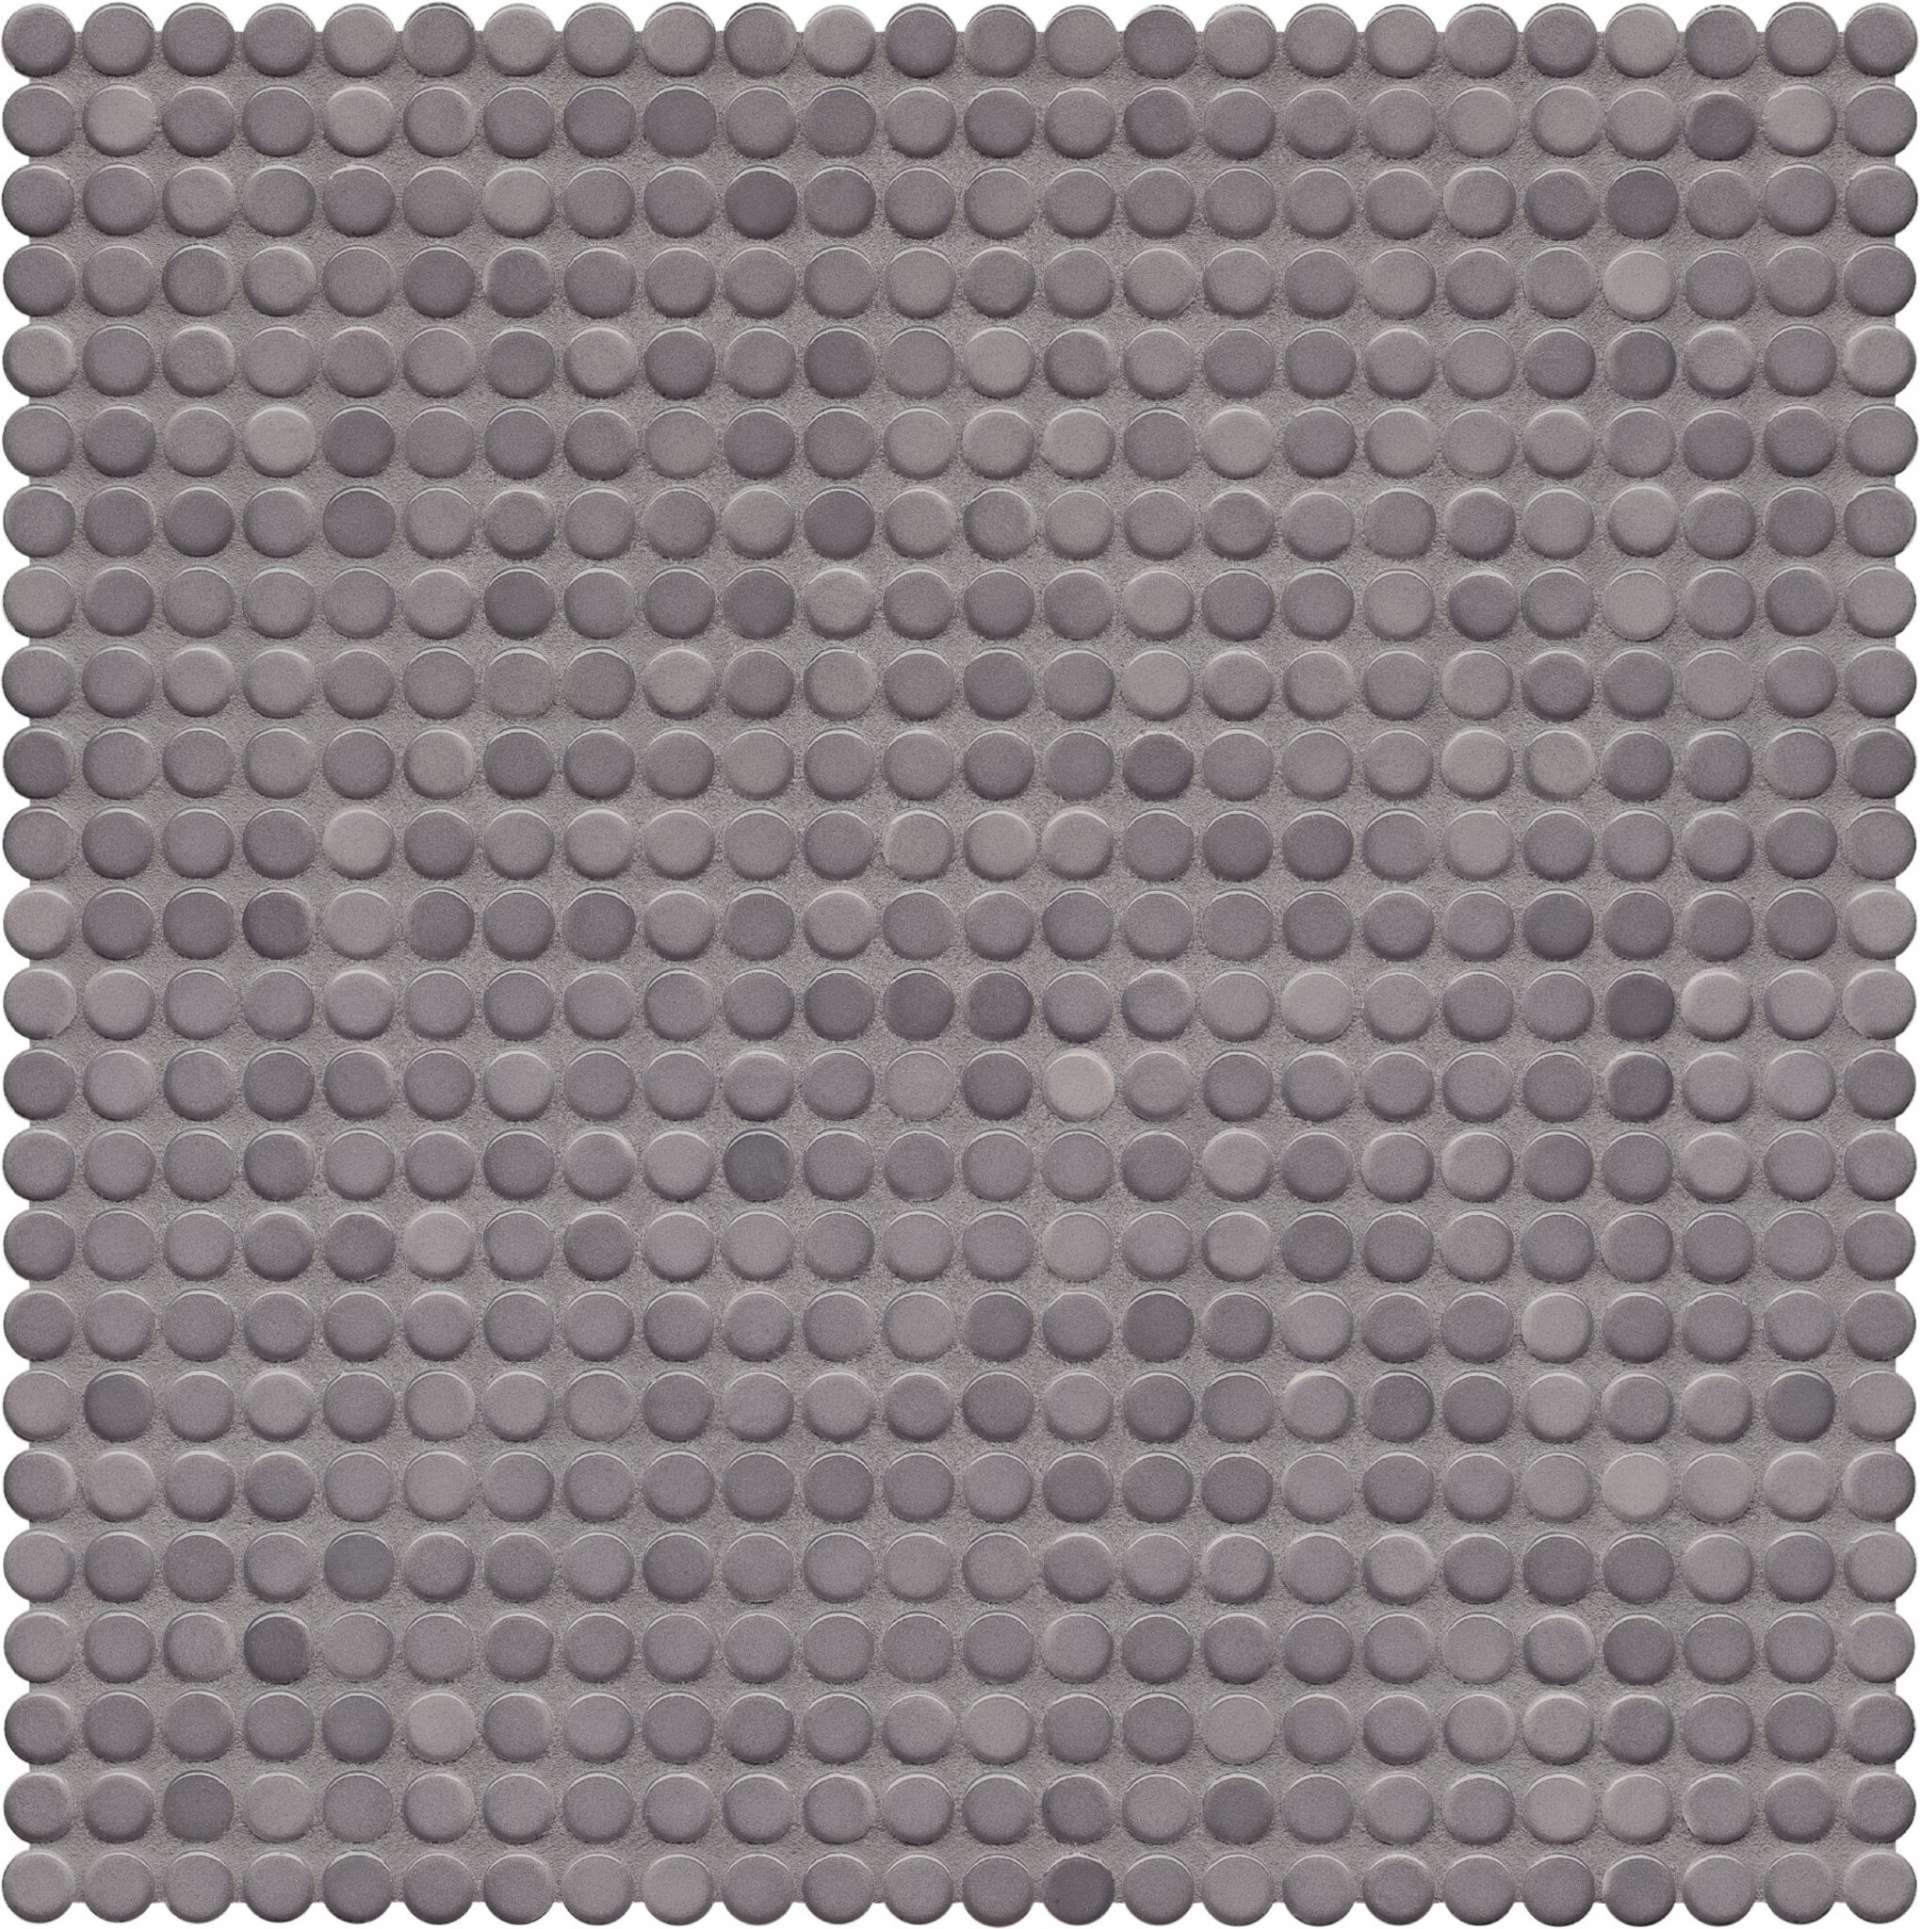 Мозаика Jasba Loop Diamantgrau 40005H-44, цвет серый, поверхность глянцевая, круг и овал, 316x316